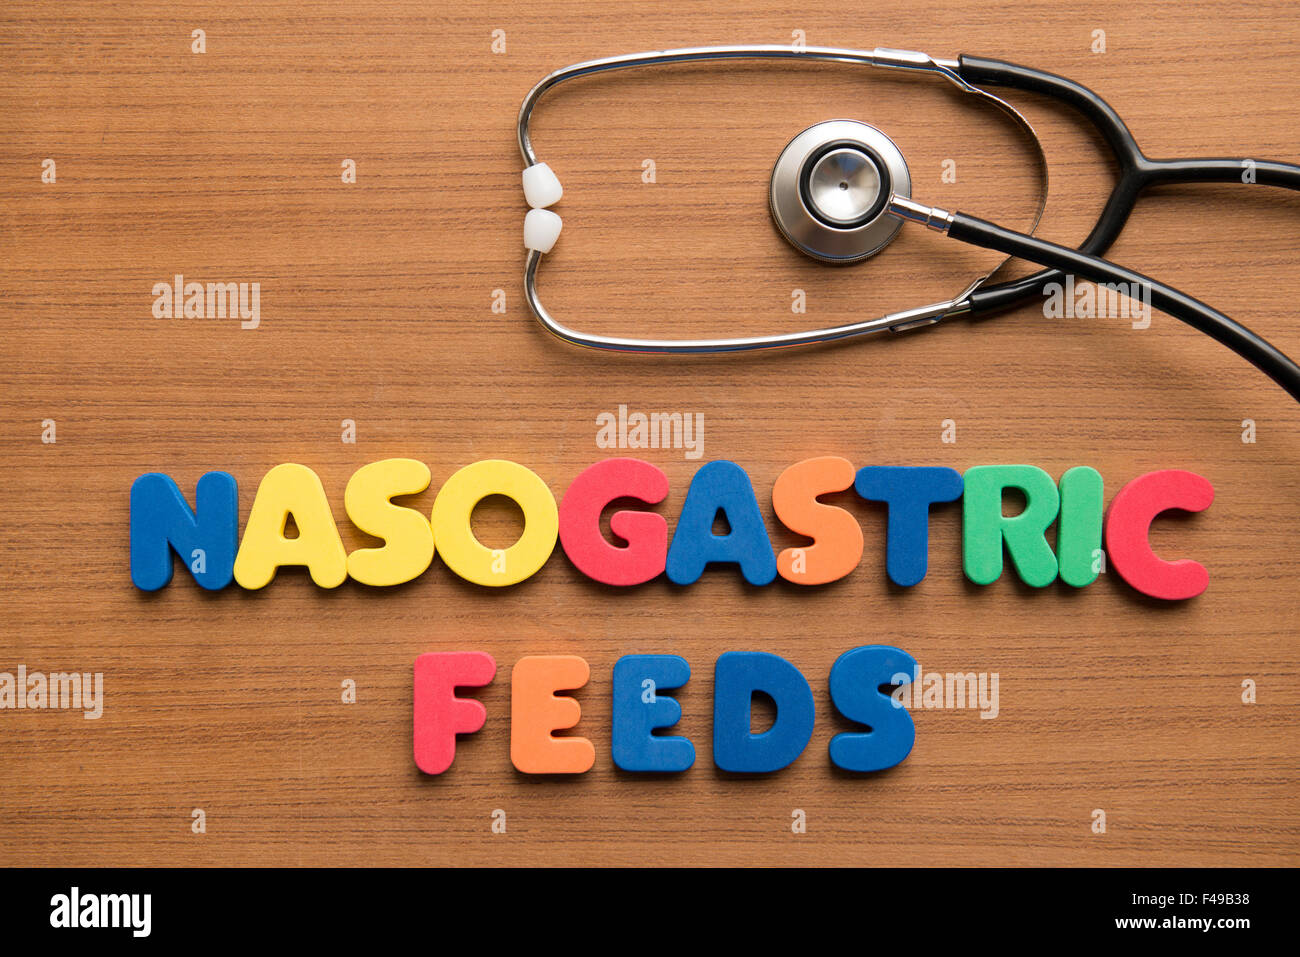 Nasogastric feeds (NG feeds) Stock Photo